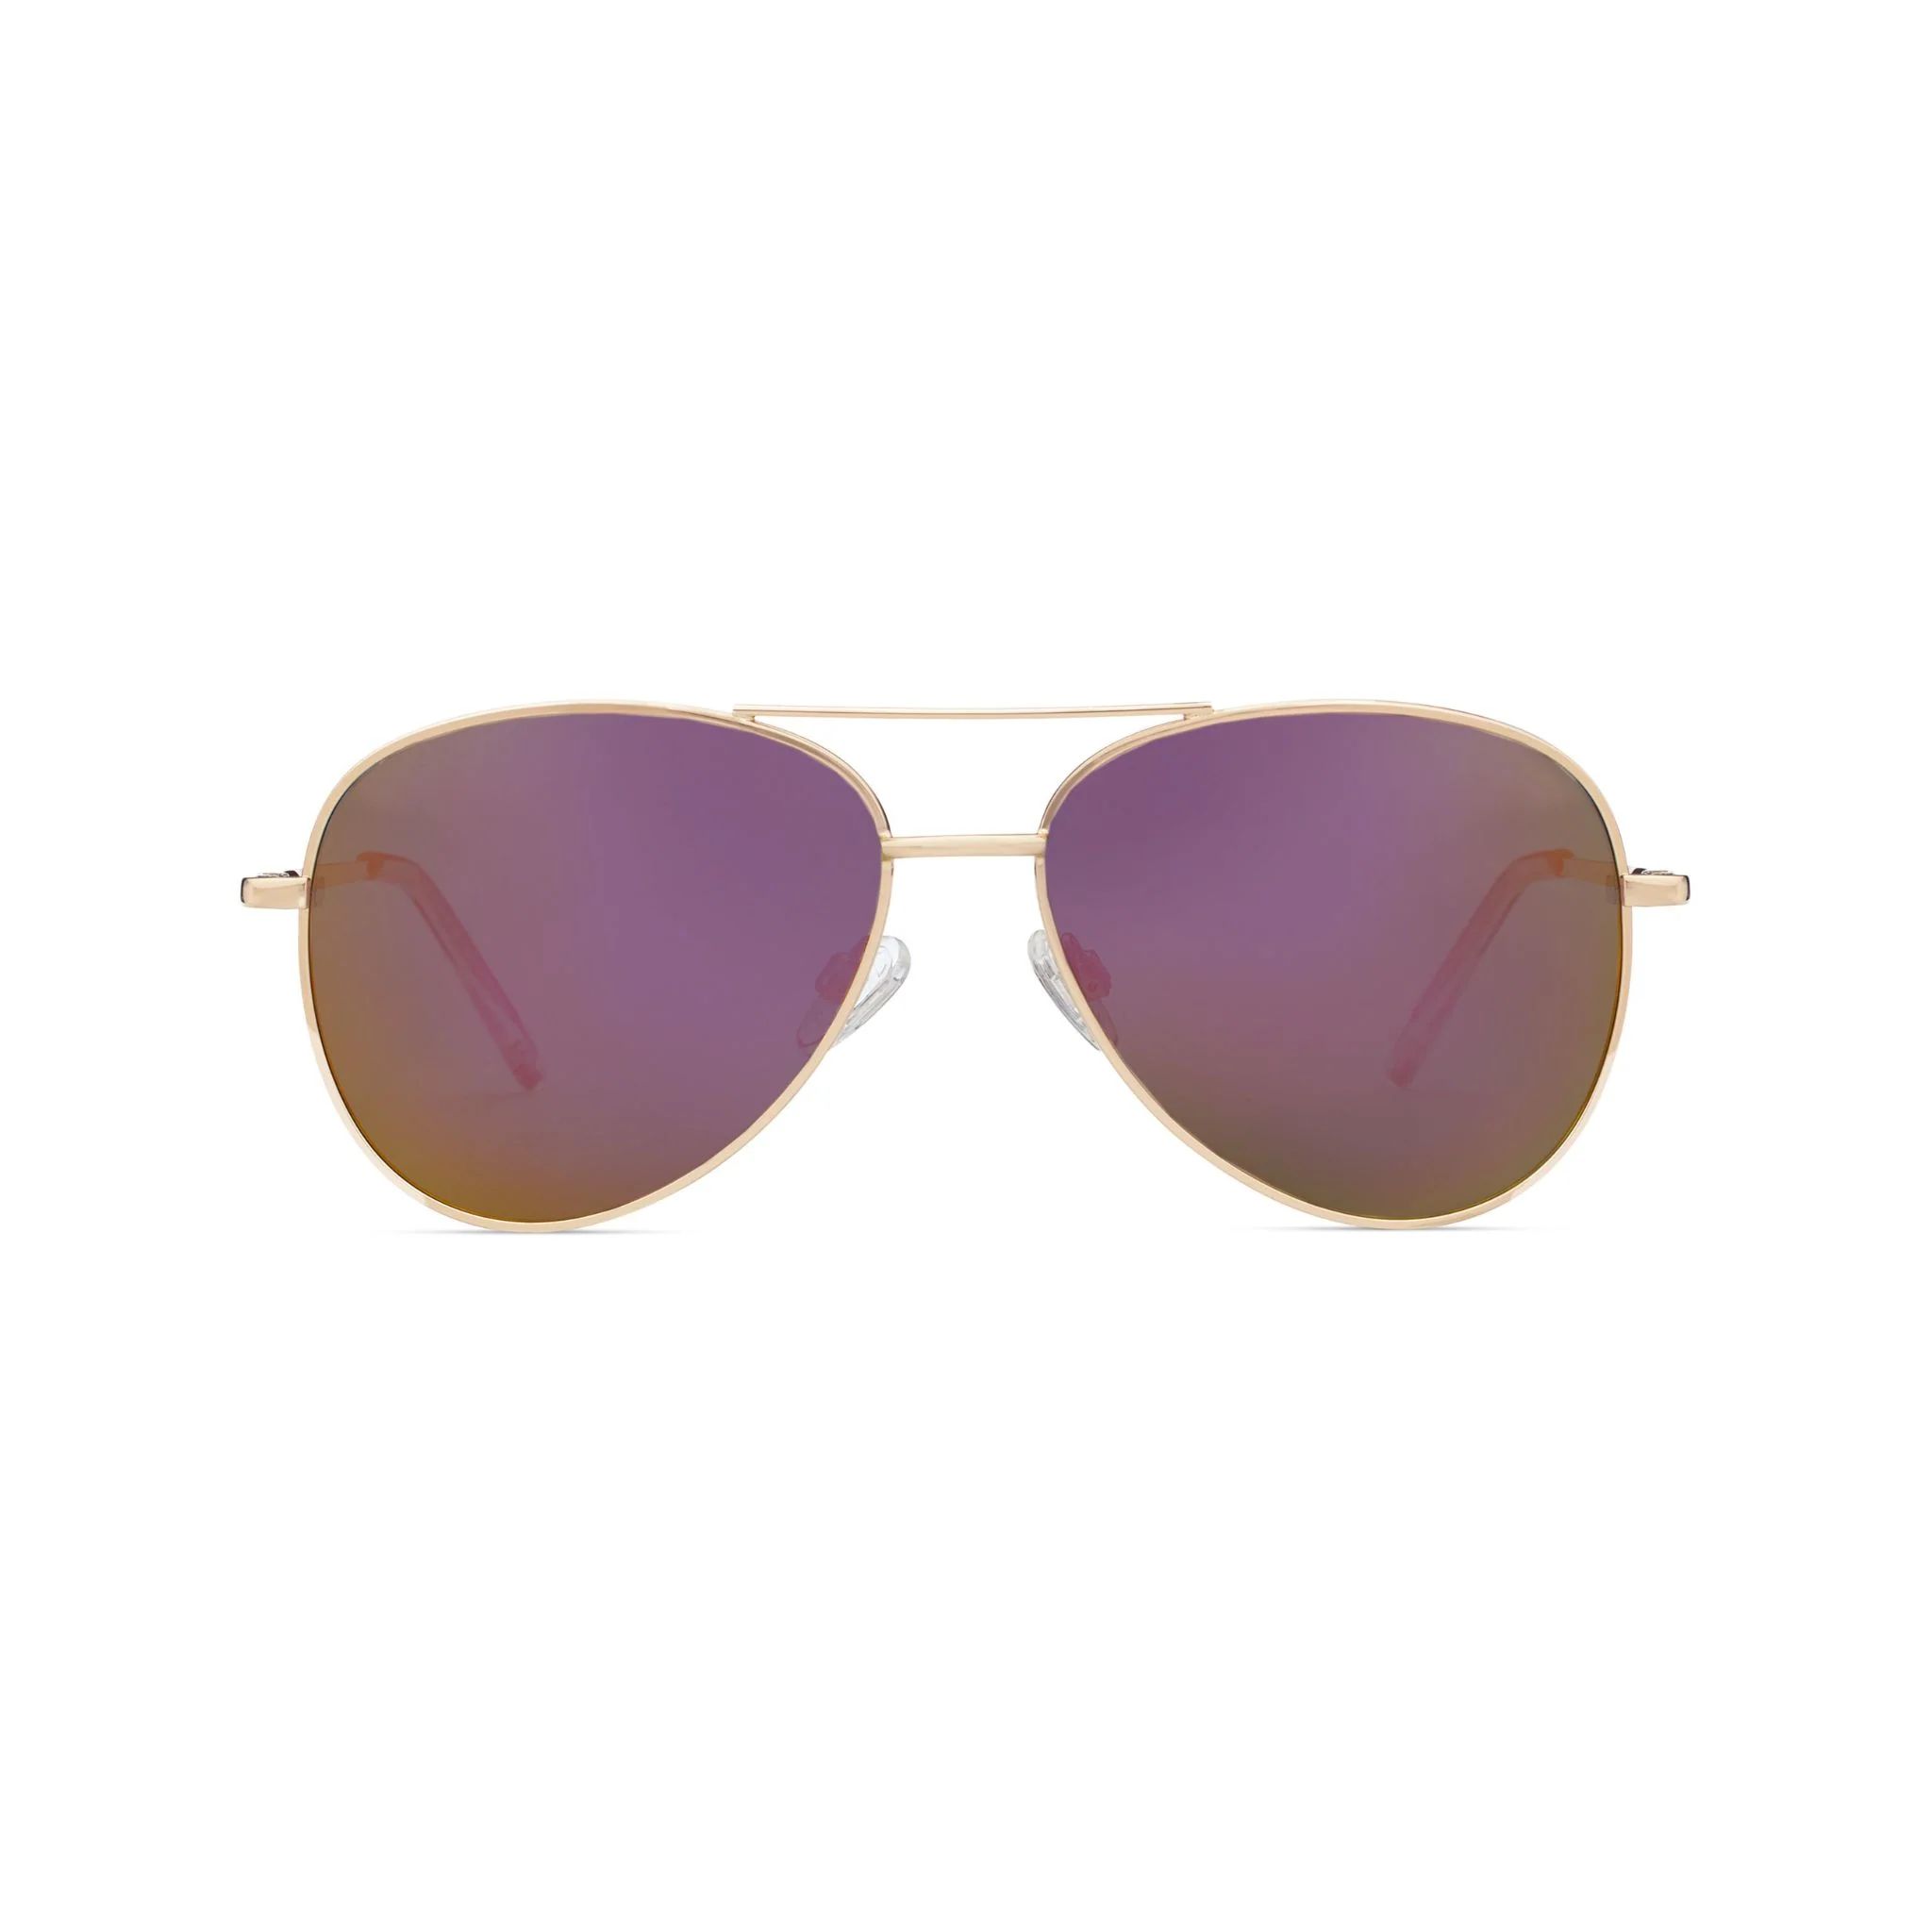 Ultraviolet | Sunglasses from Peepers - Peepers by PeeperSpecs | Peepers